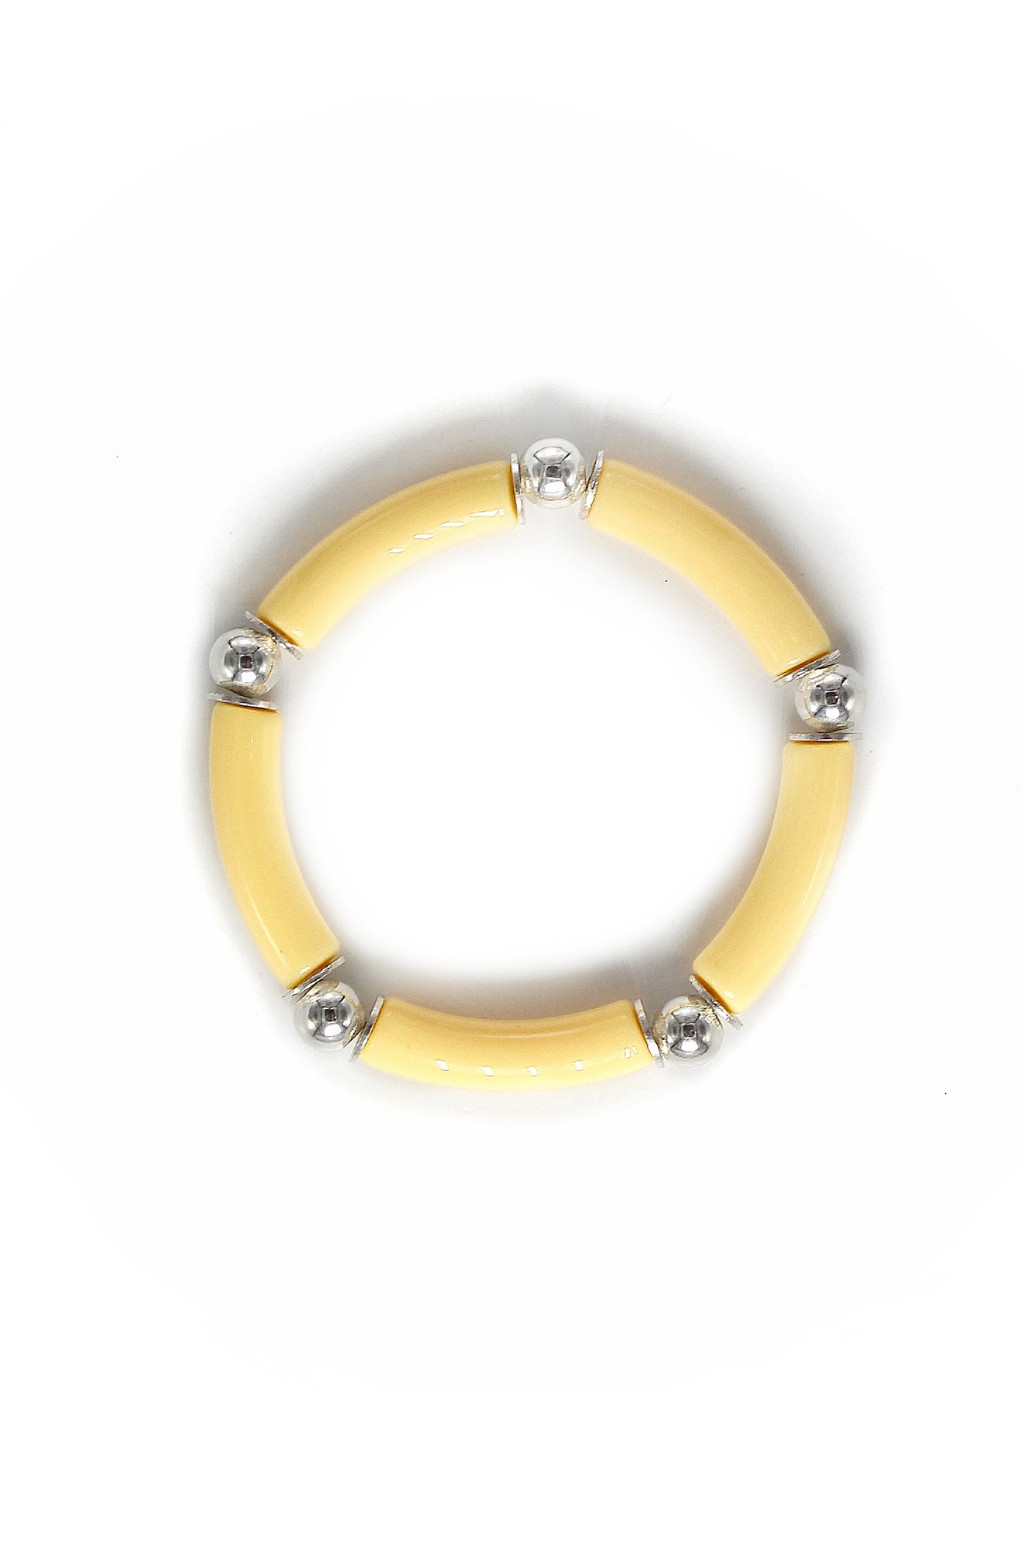 VIP Plus One Bracelet (Singles) by Annie Claire Designs - SoSis